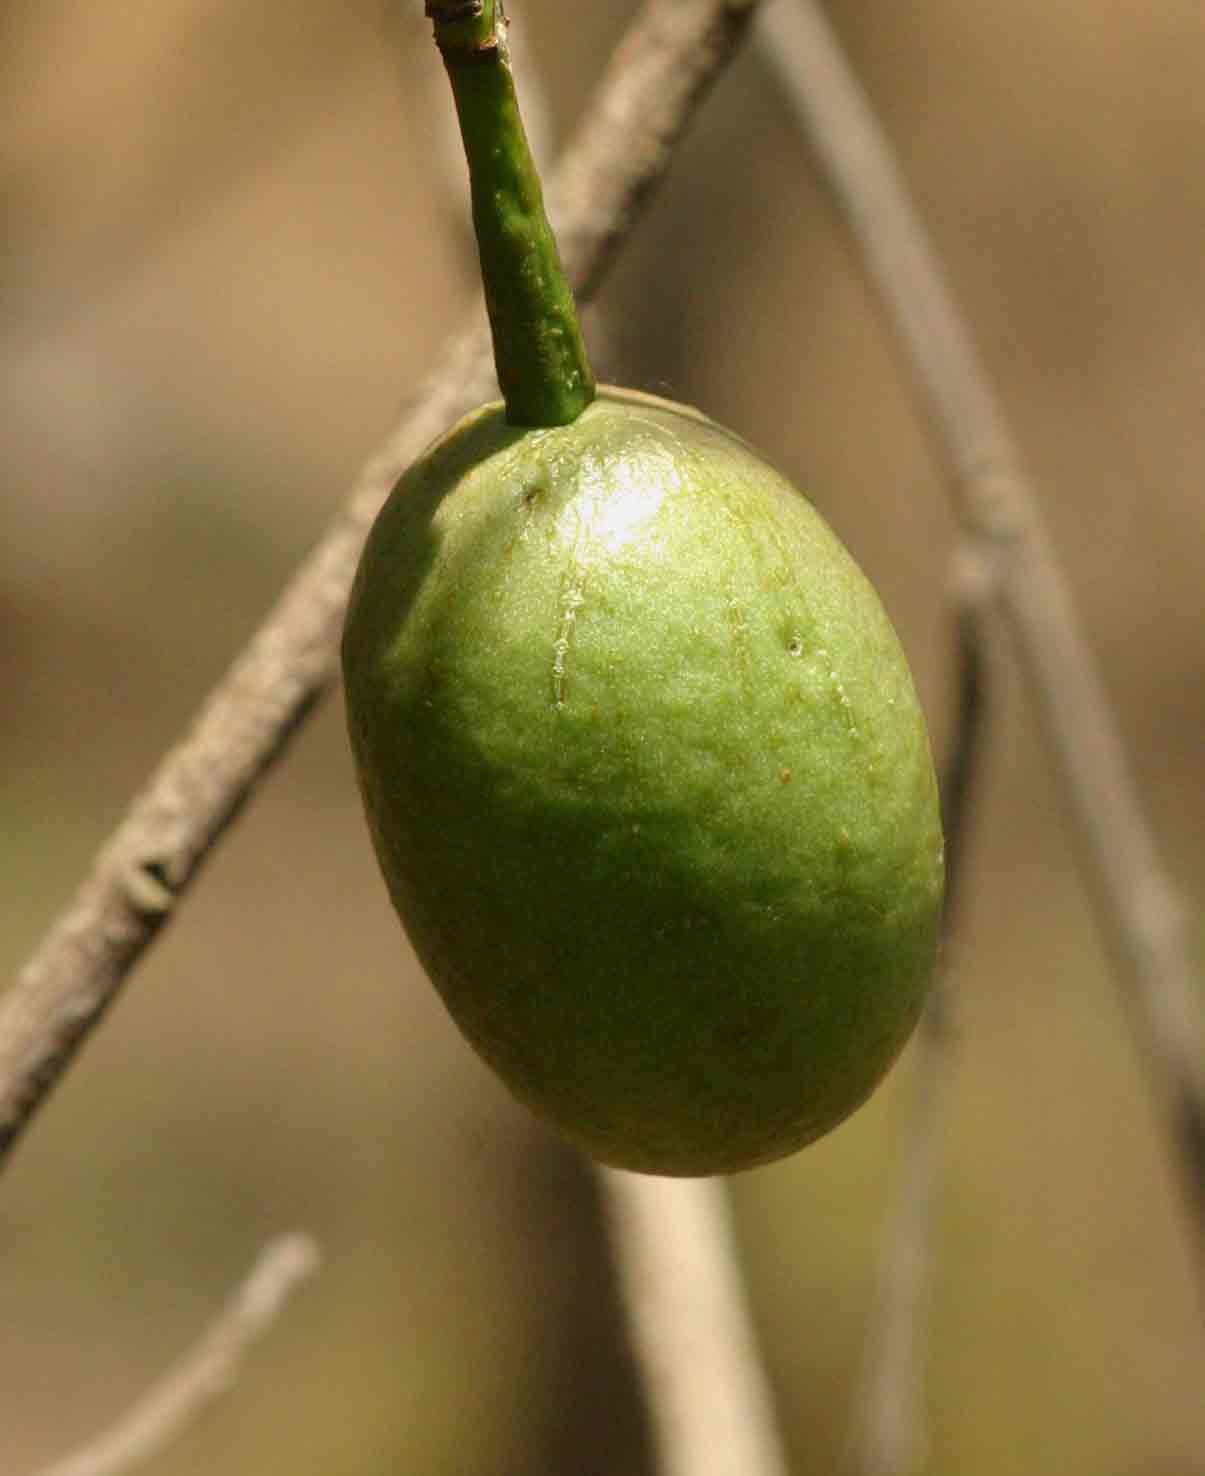 Maerua juncea subsp. juncea